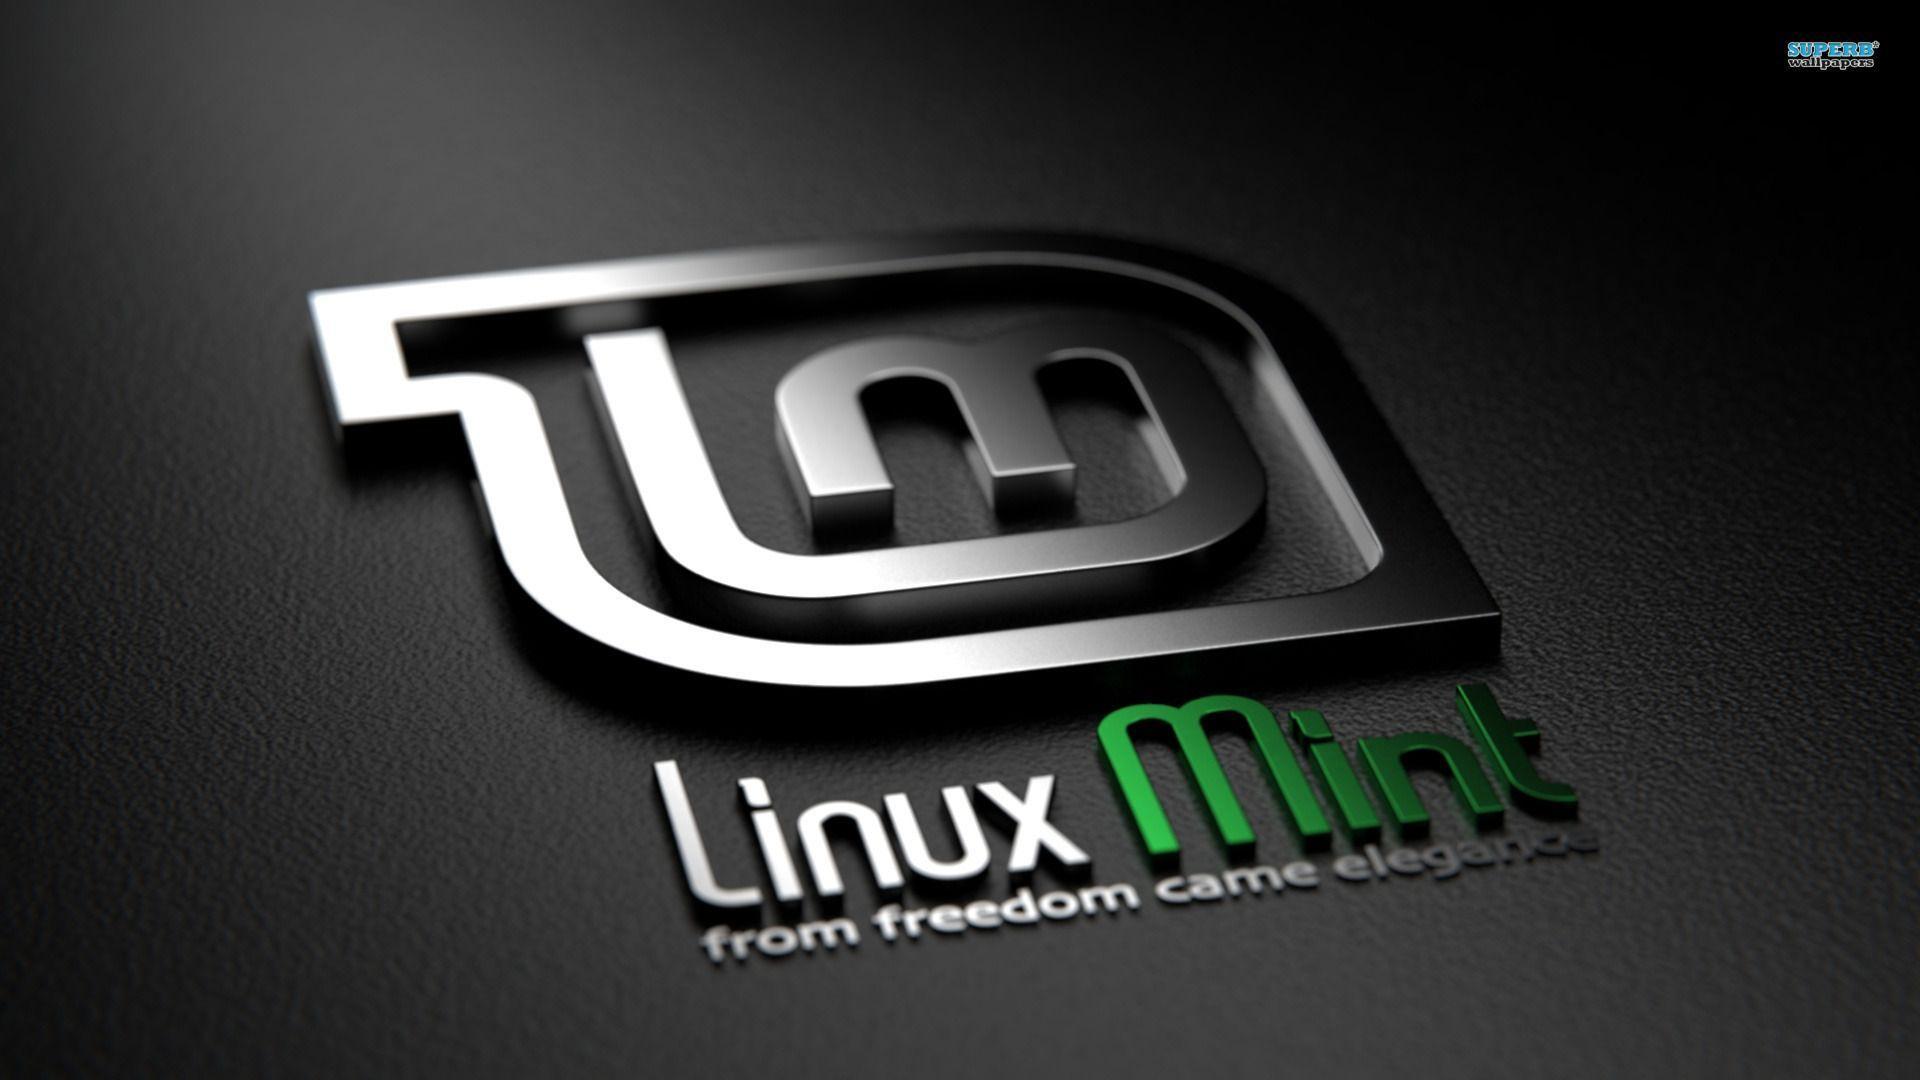 Ubuntu mate linux mint wallpaper  Multimedia Showcase  Ubuntu MATE  Community